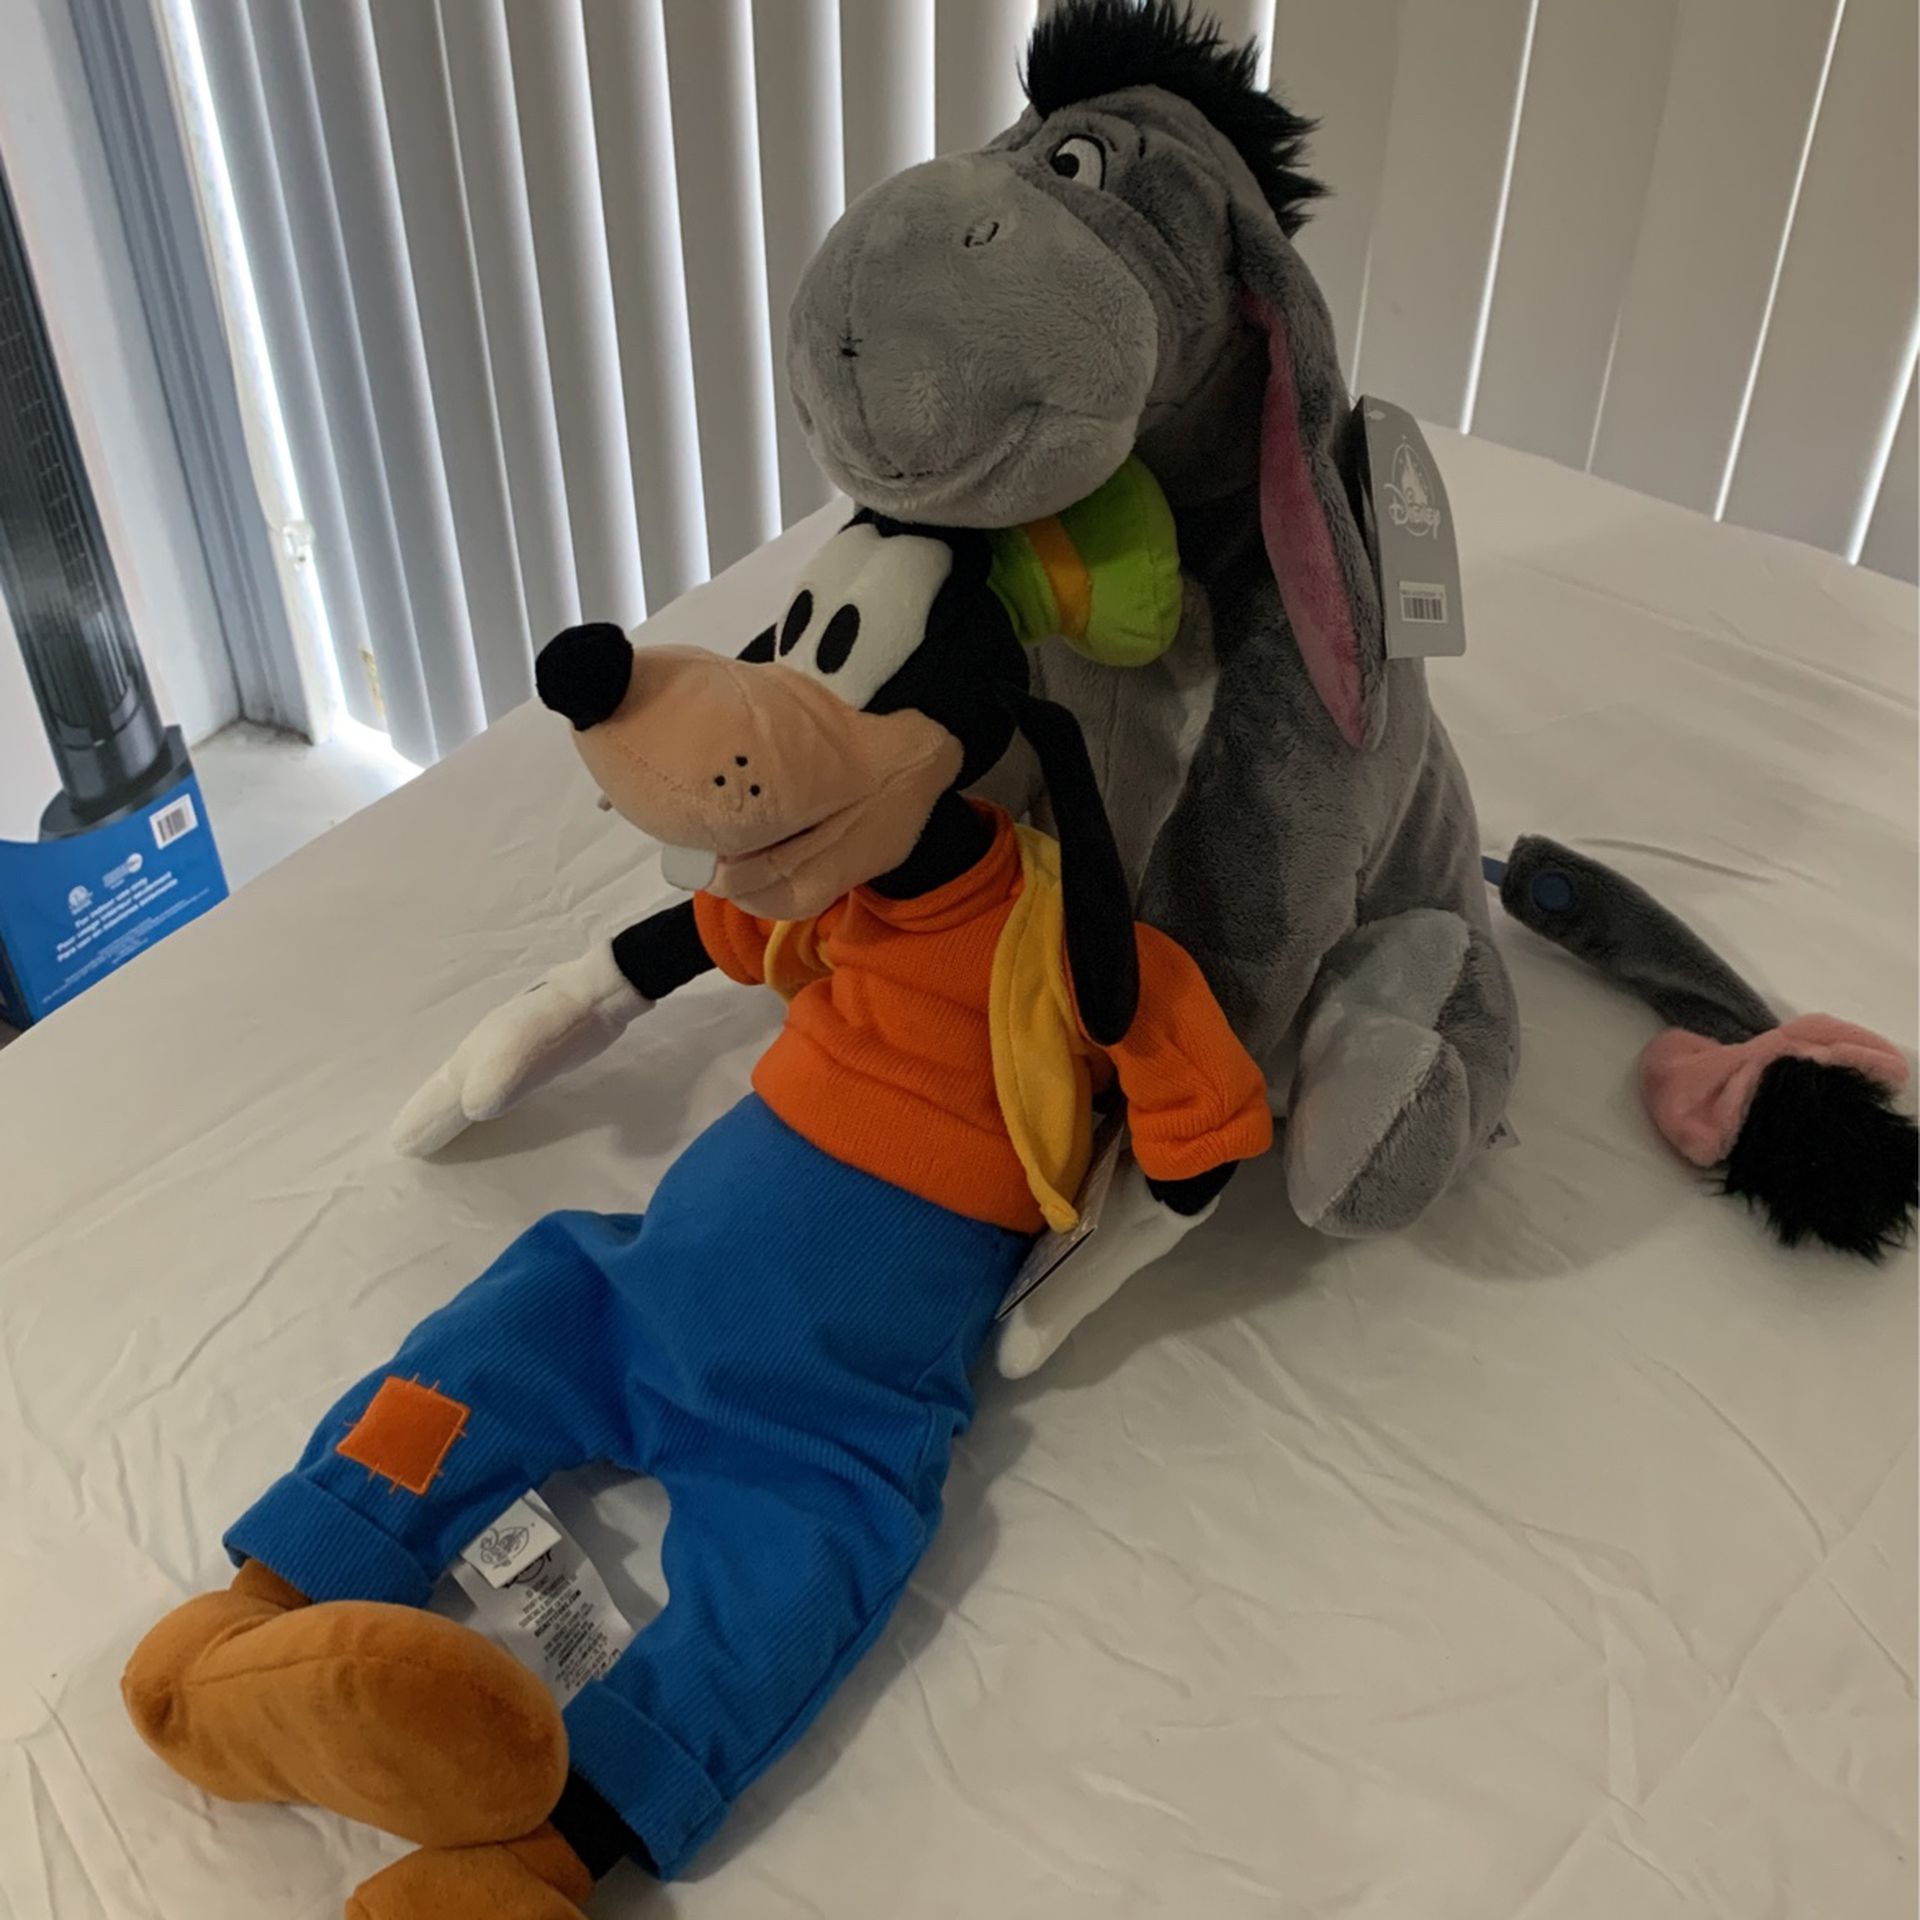 Disney Stuffed Animals